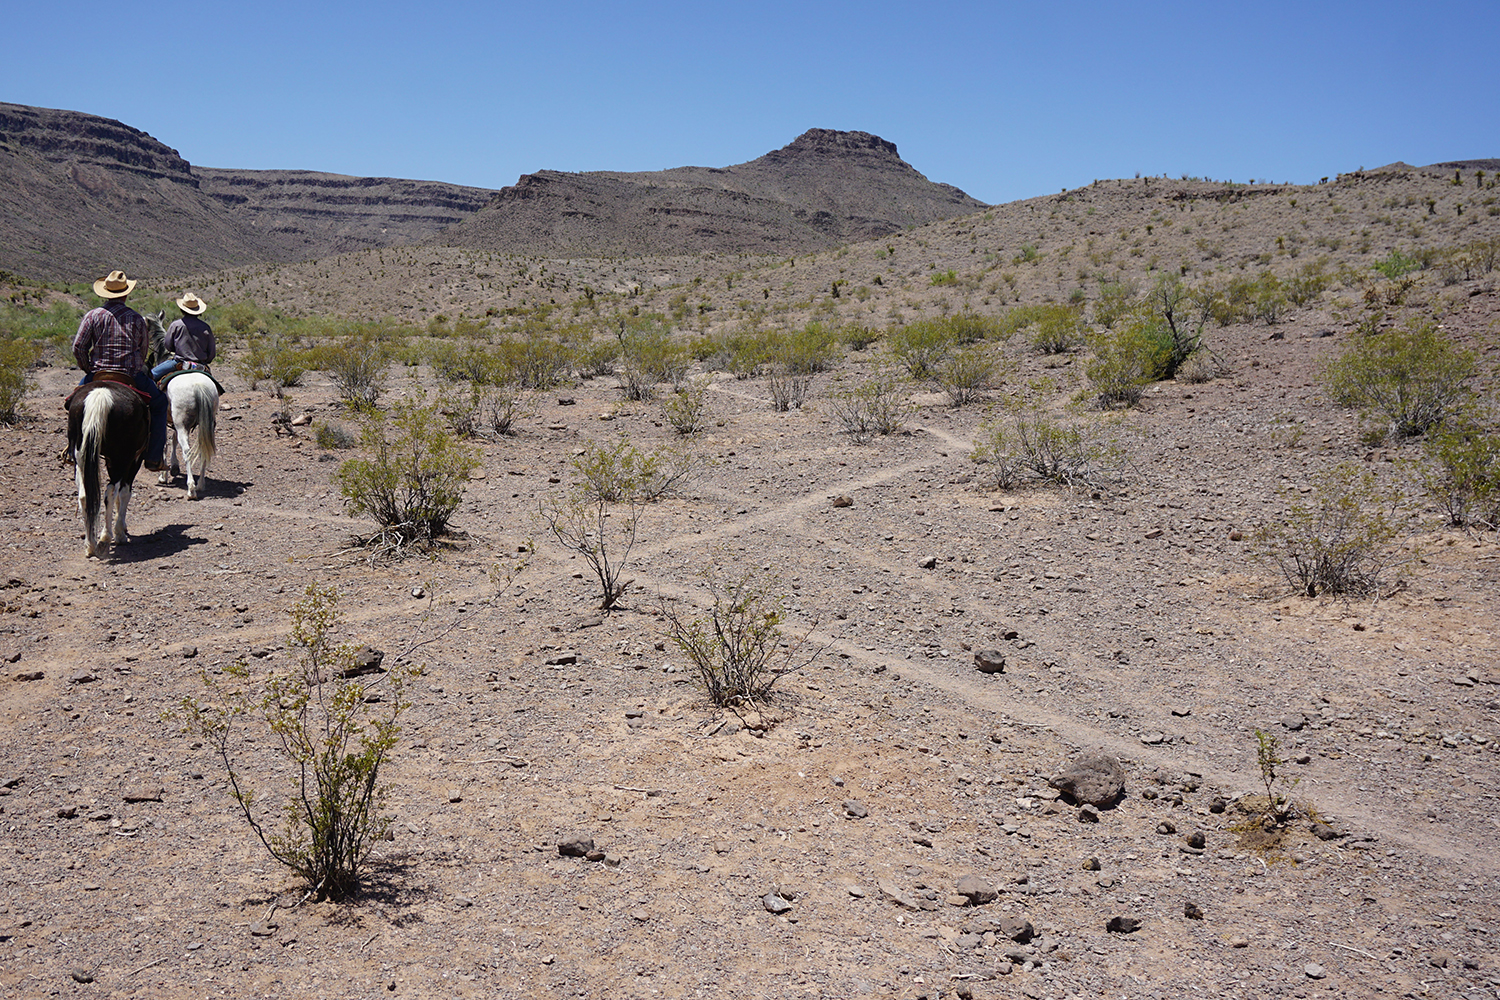 trails on dry terrain